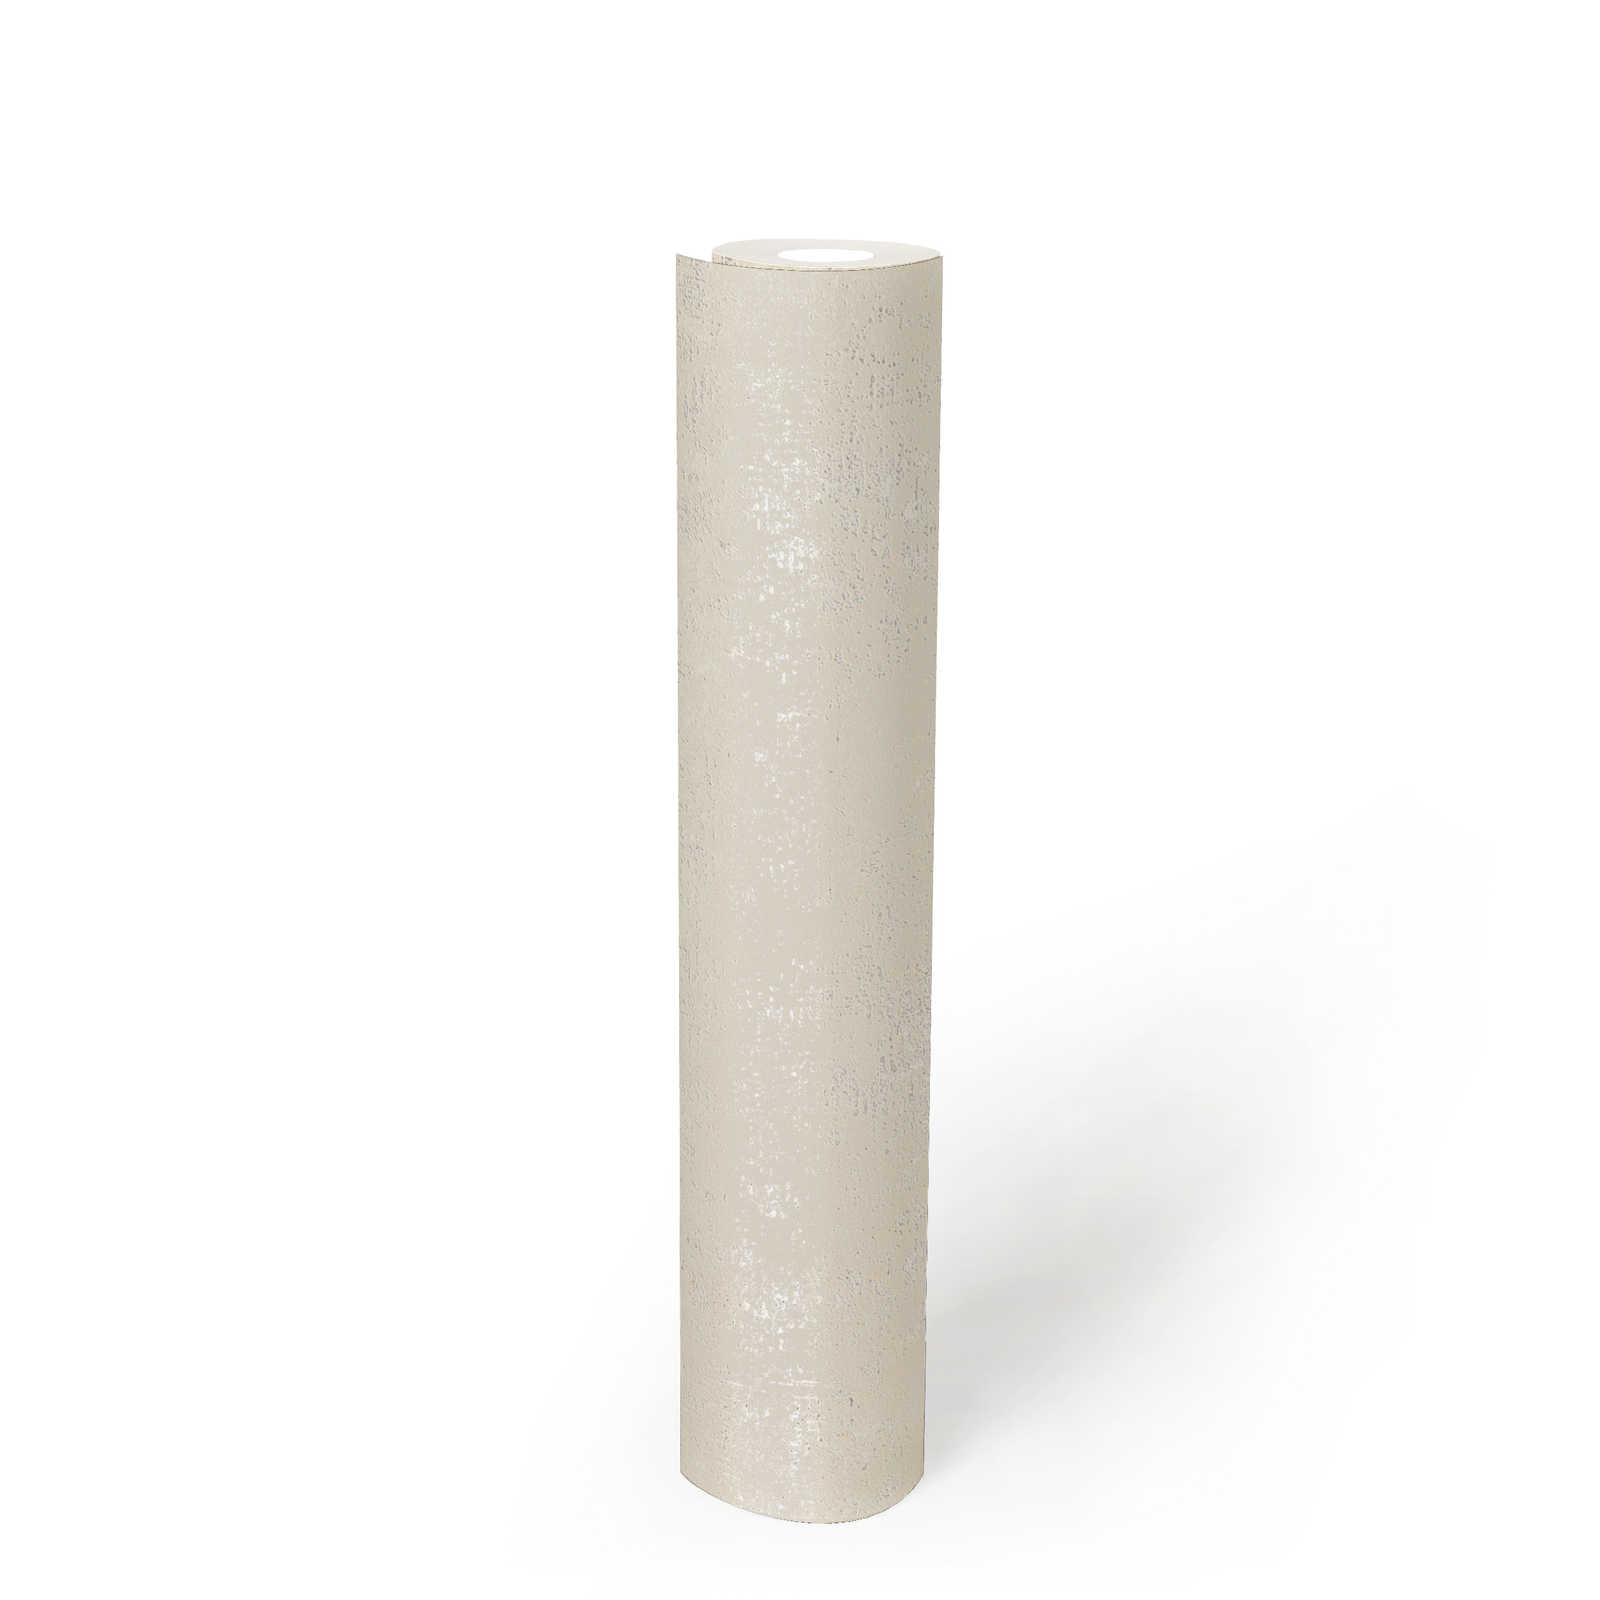             Crème vliesbehang met structuurpatroon in gipslook
        